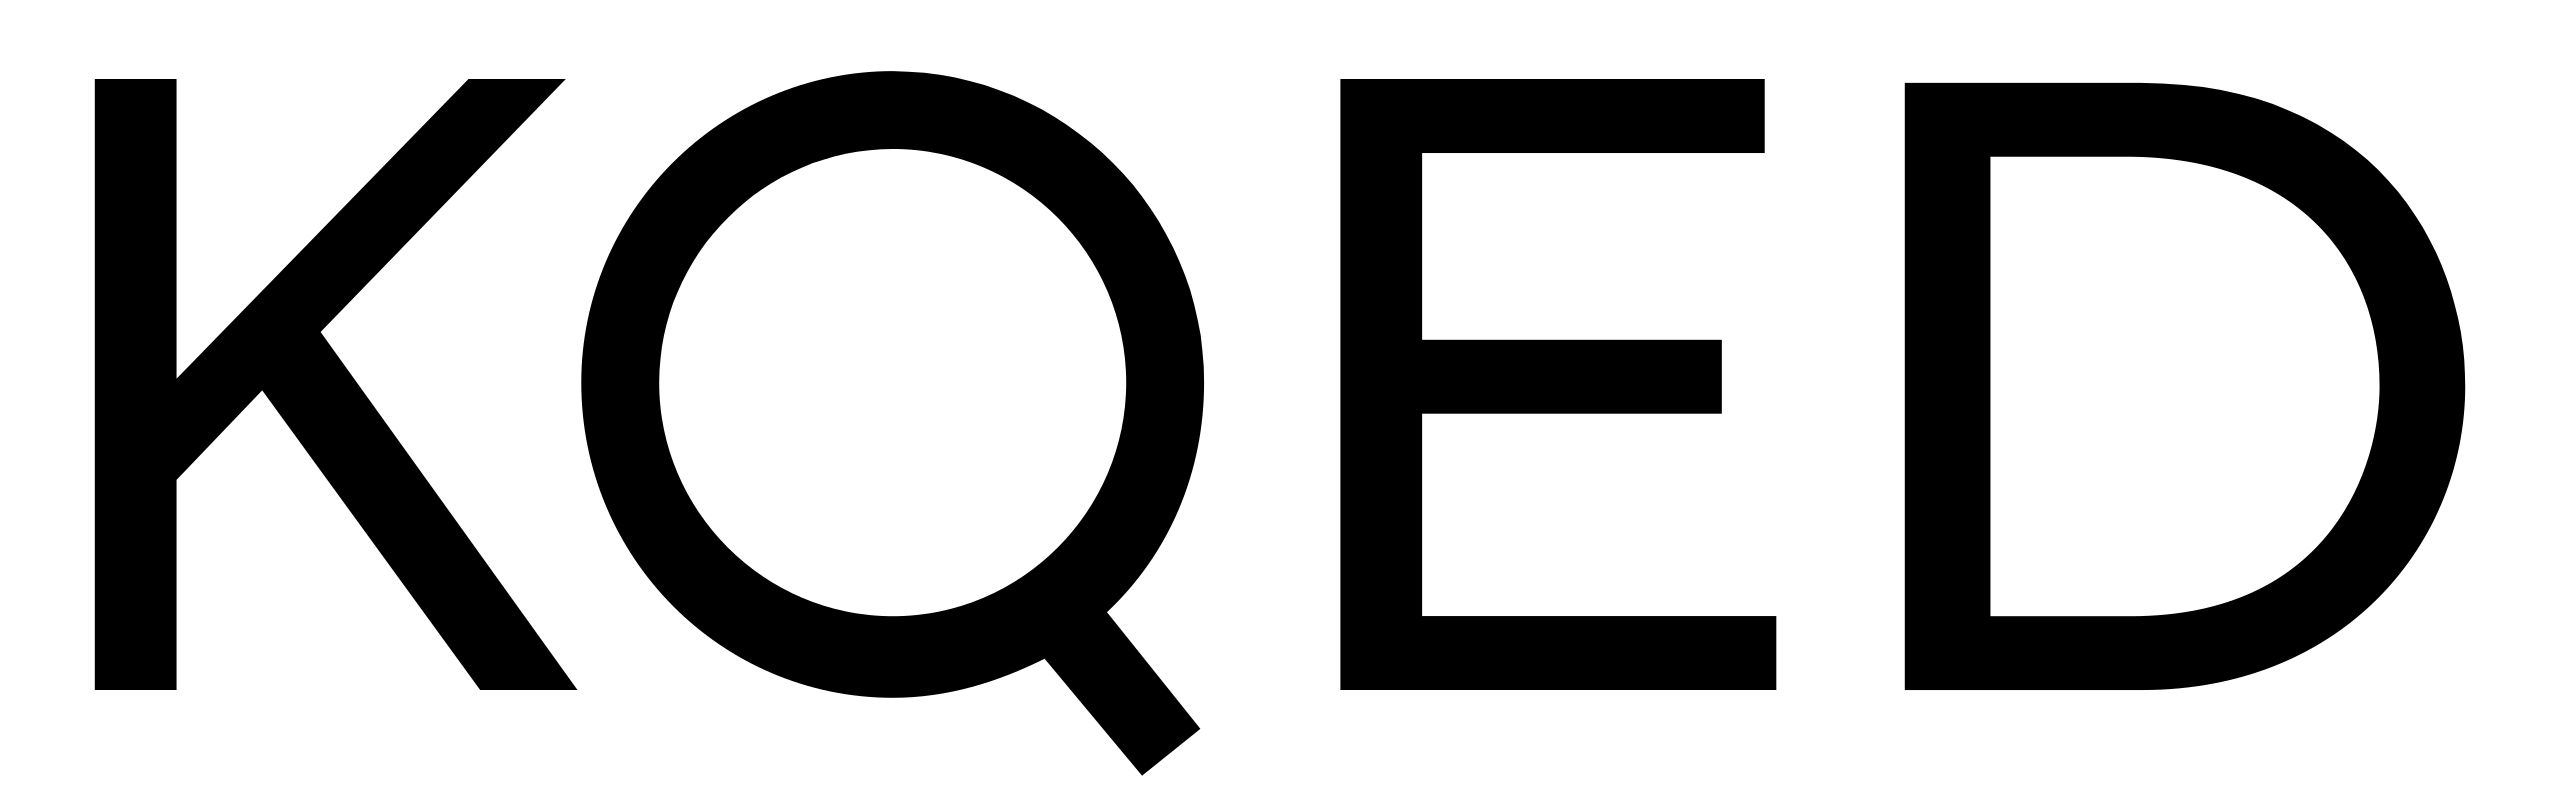 2560px-KQED-logo.svg